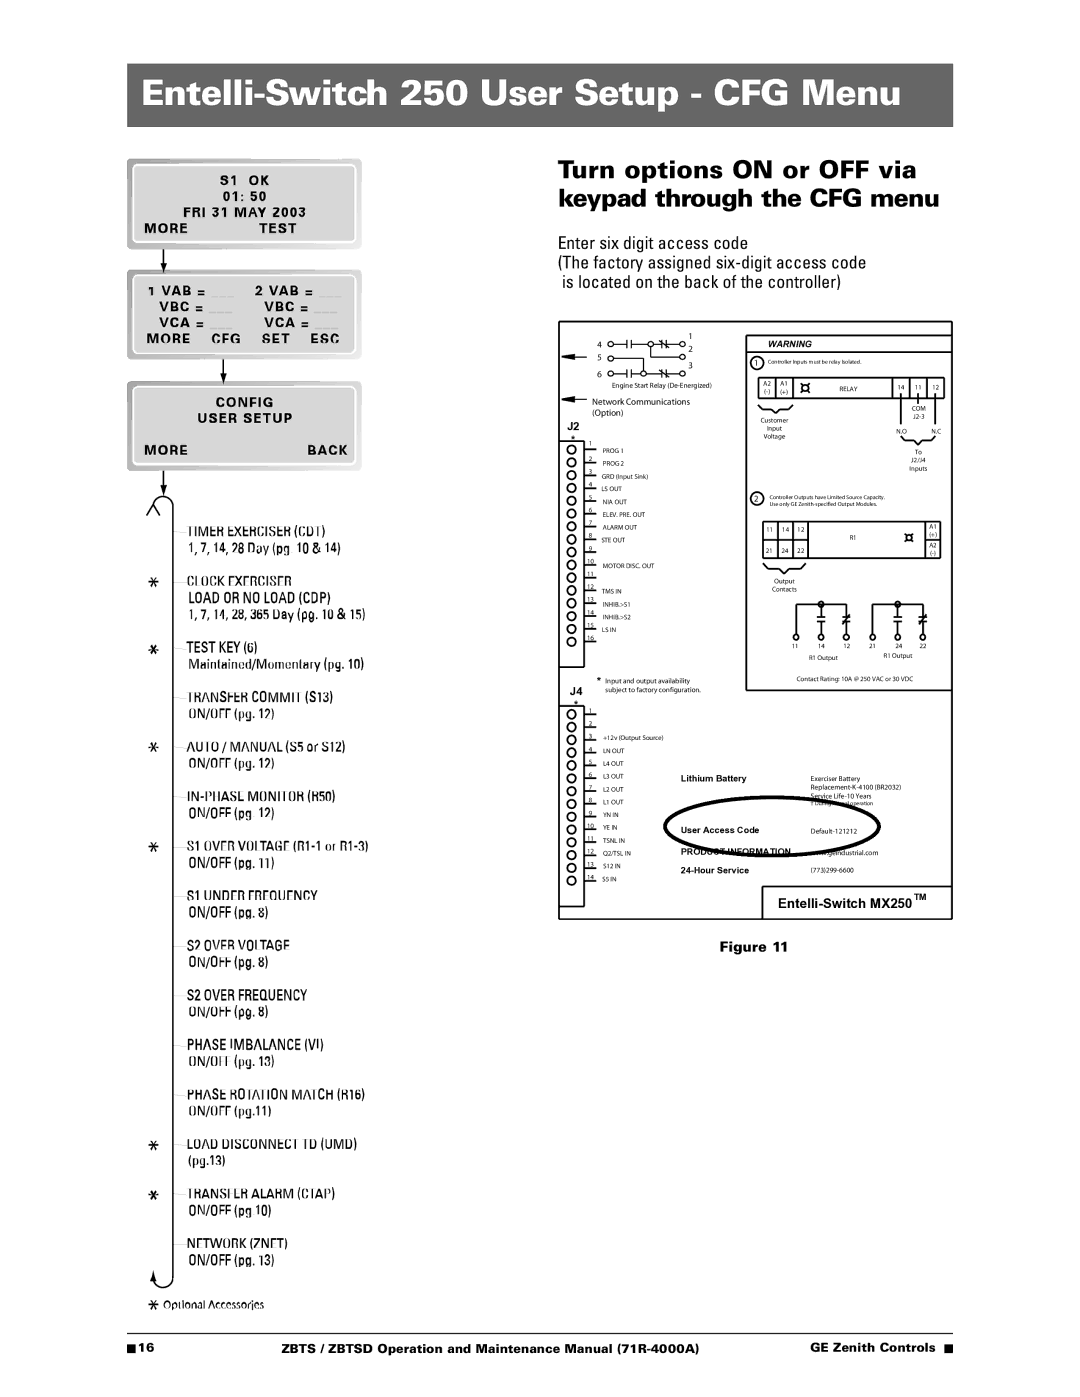 GE ZBTSD manual Entelli-Switch 250 User Setup CFG Menu, Turn options on or OFF via keypad through the CFG menu 